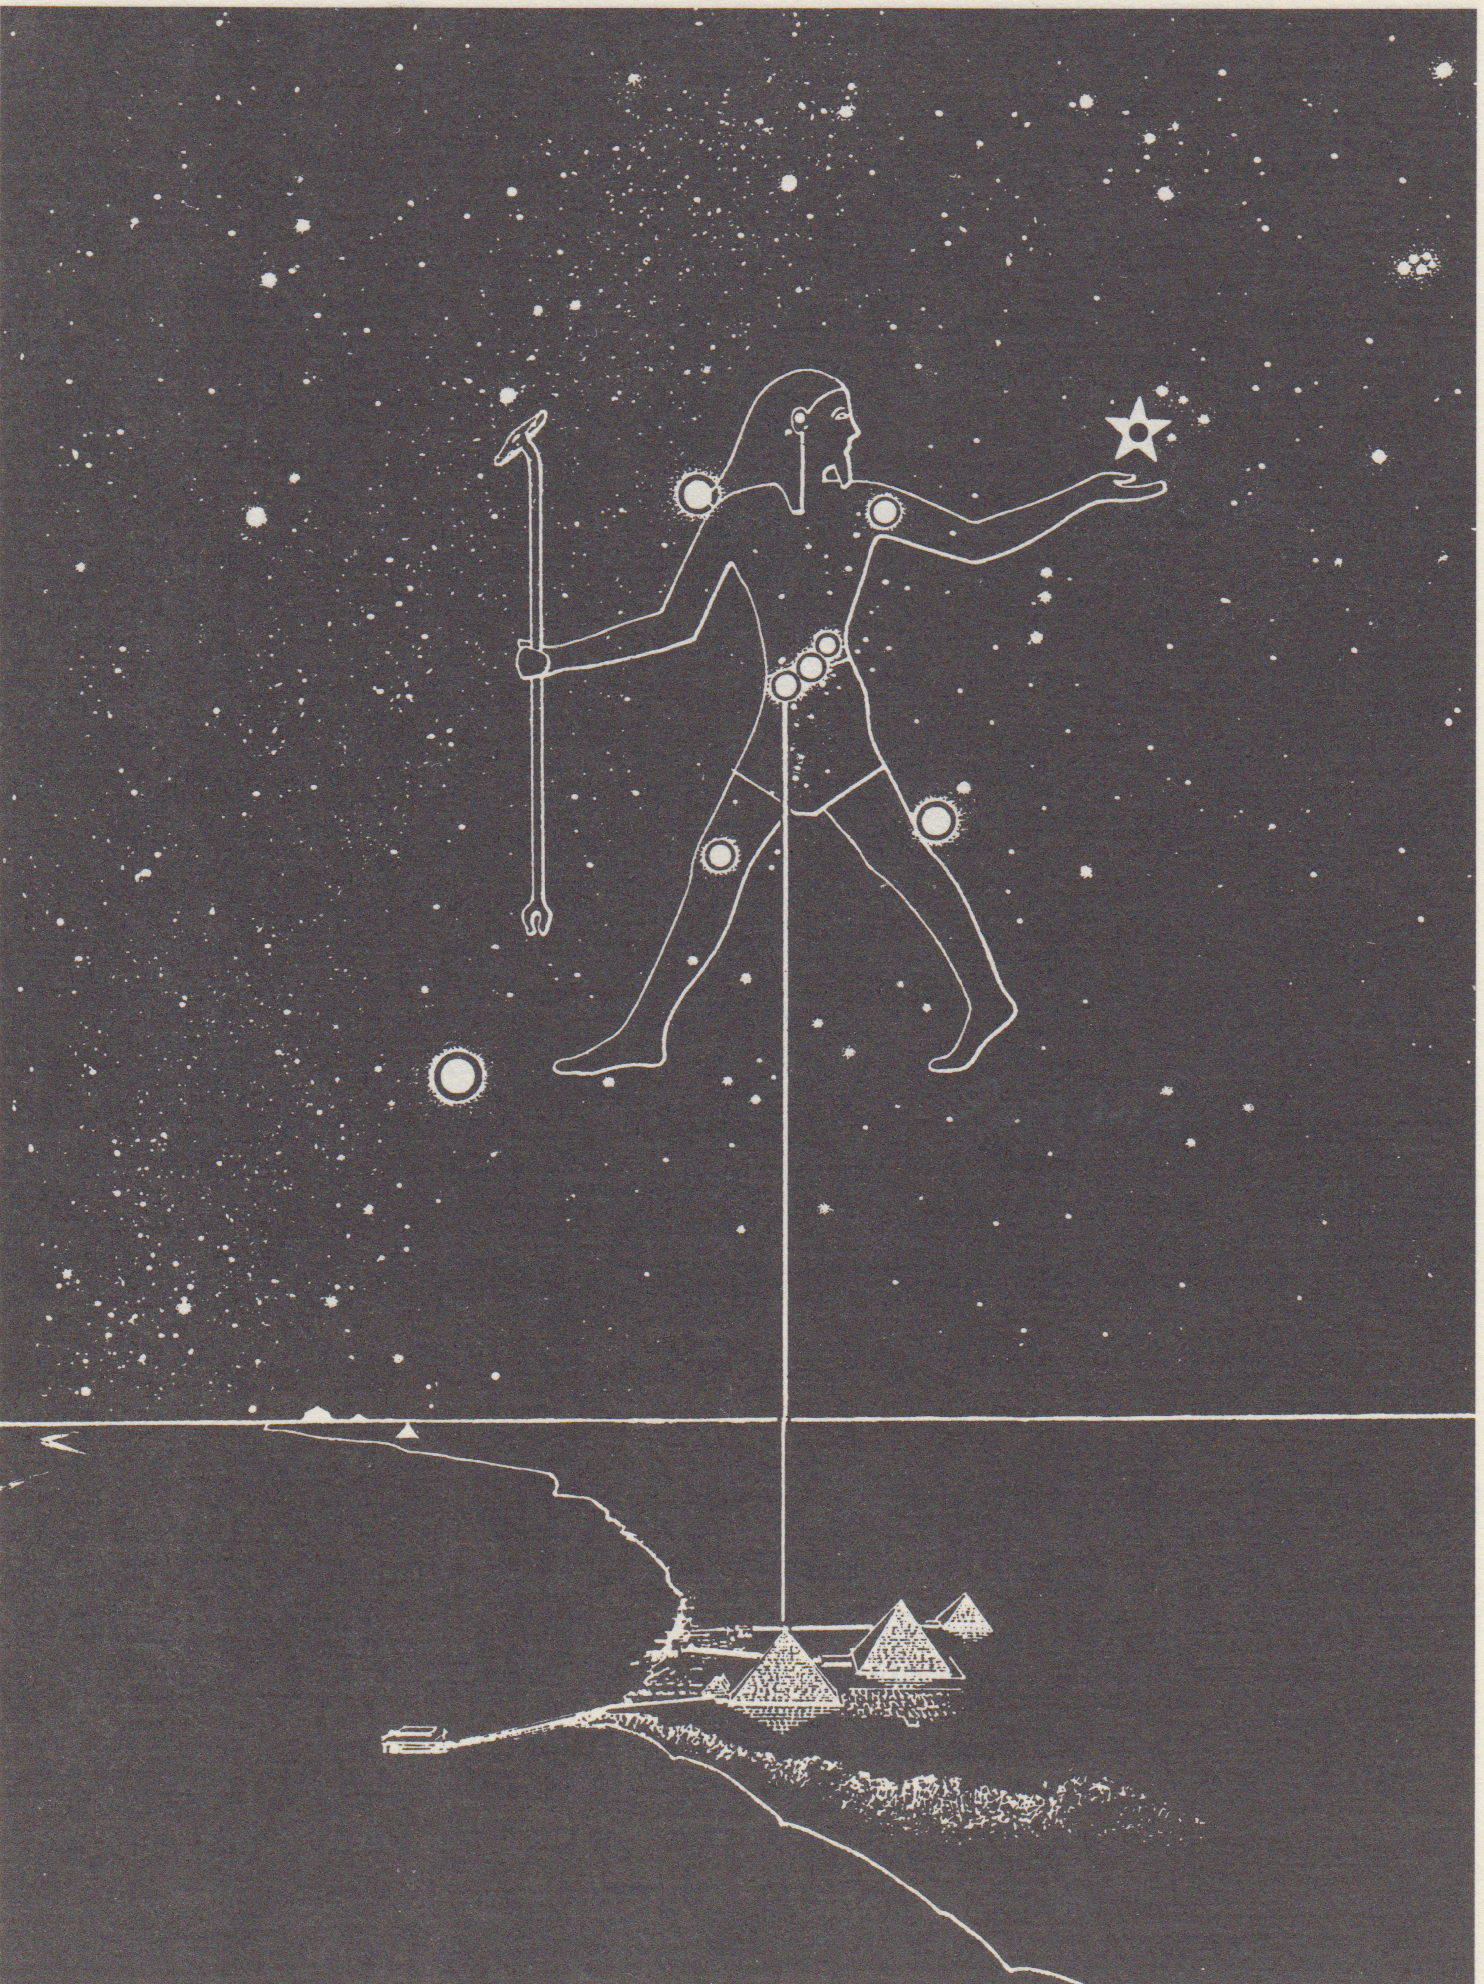 Созвездие орион легенда. Созвездие Орион и звезда Сириус. Пирамиды Египта Созвездие Ориона. Созвездие Осириса. Созвездие Ориона в Египте.